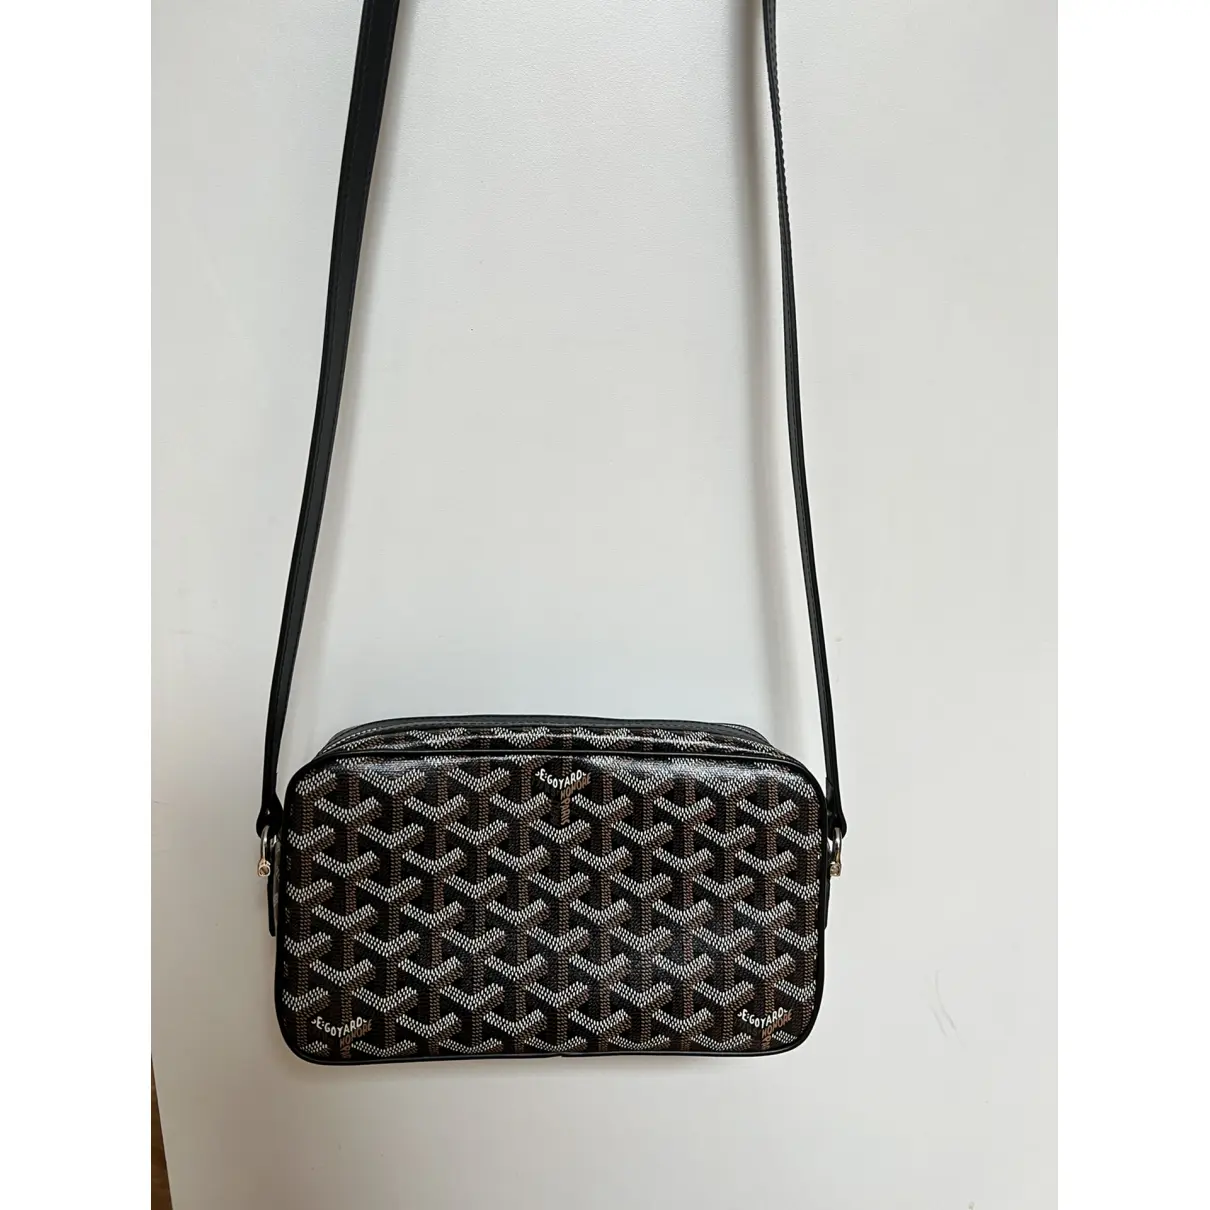 Buy Goyard Cap vert patent leather crossbody bag online